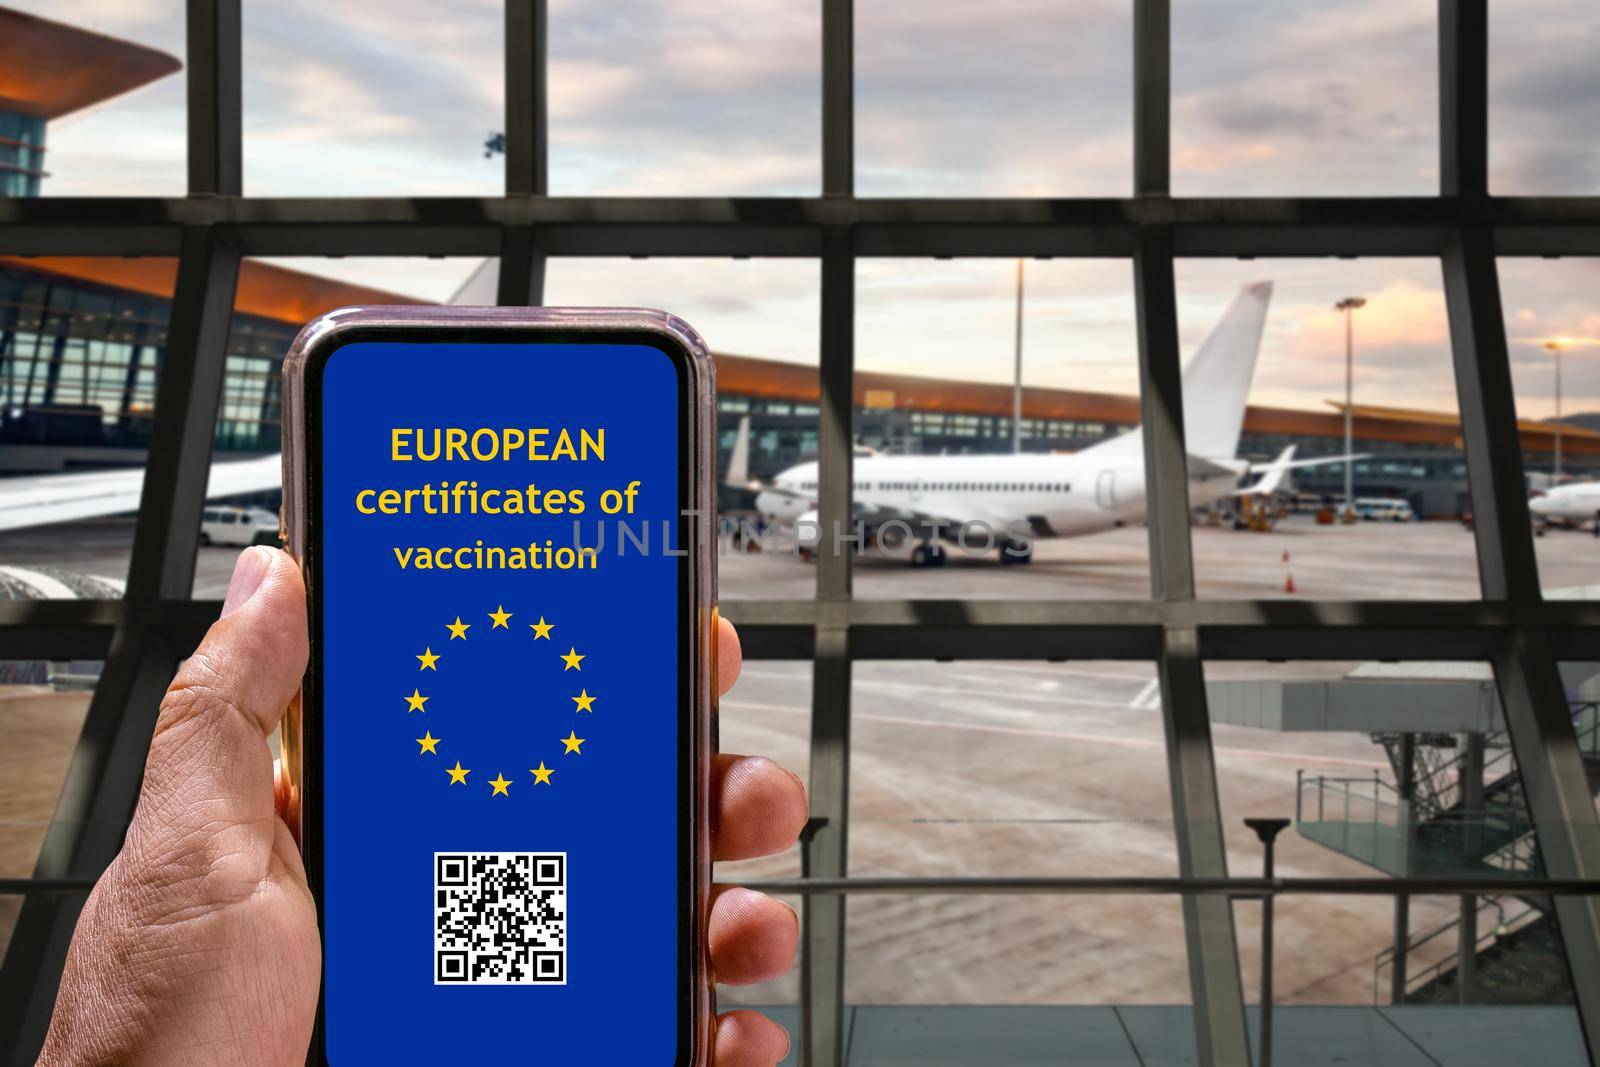 EU digital Covid vaccination certificate on moble phone.